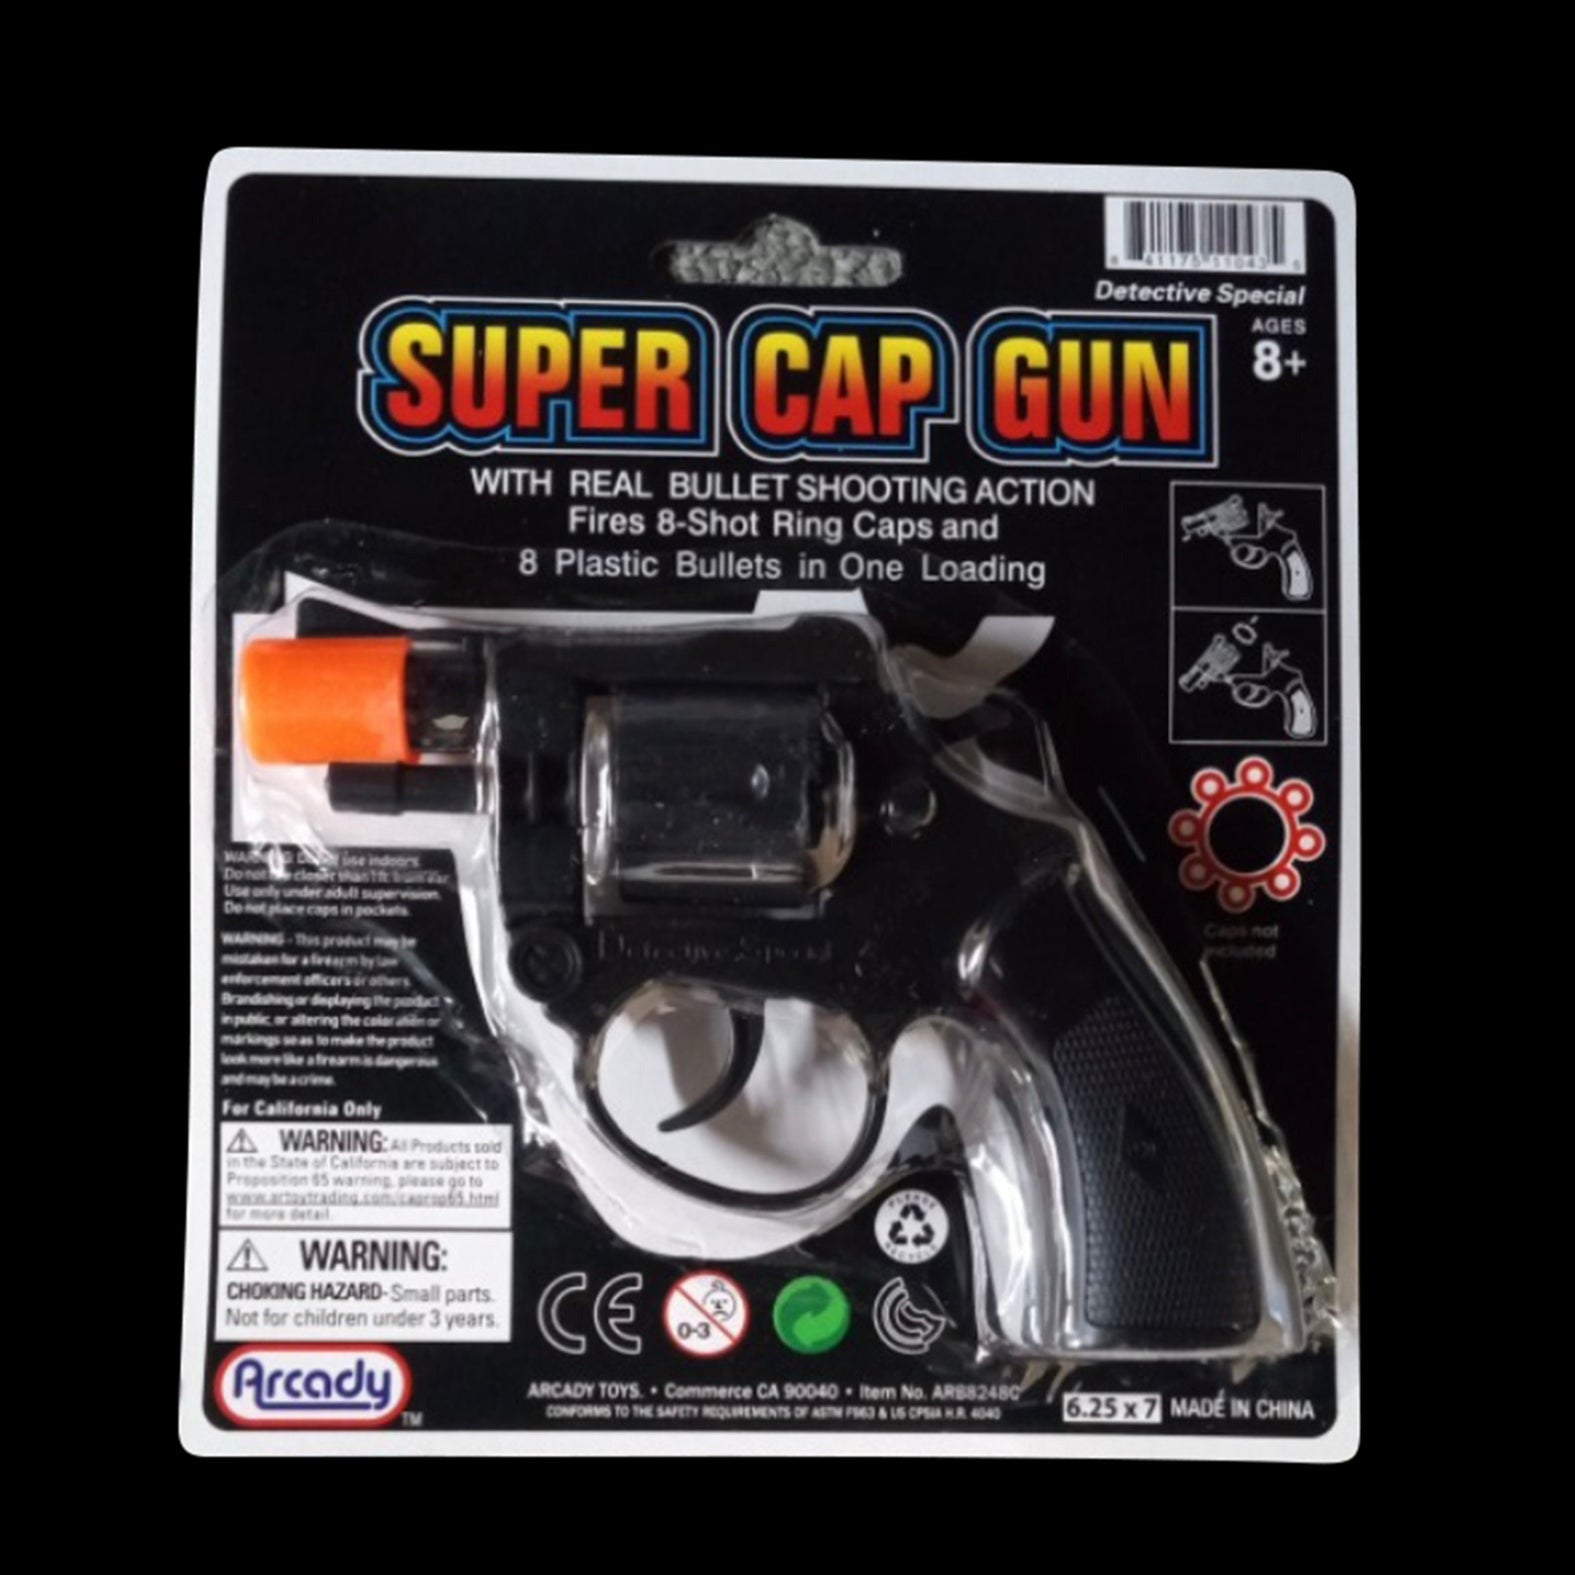 Super Cap Gun Pistol Toy